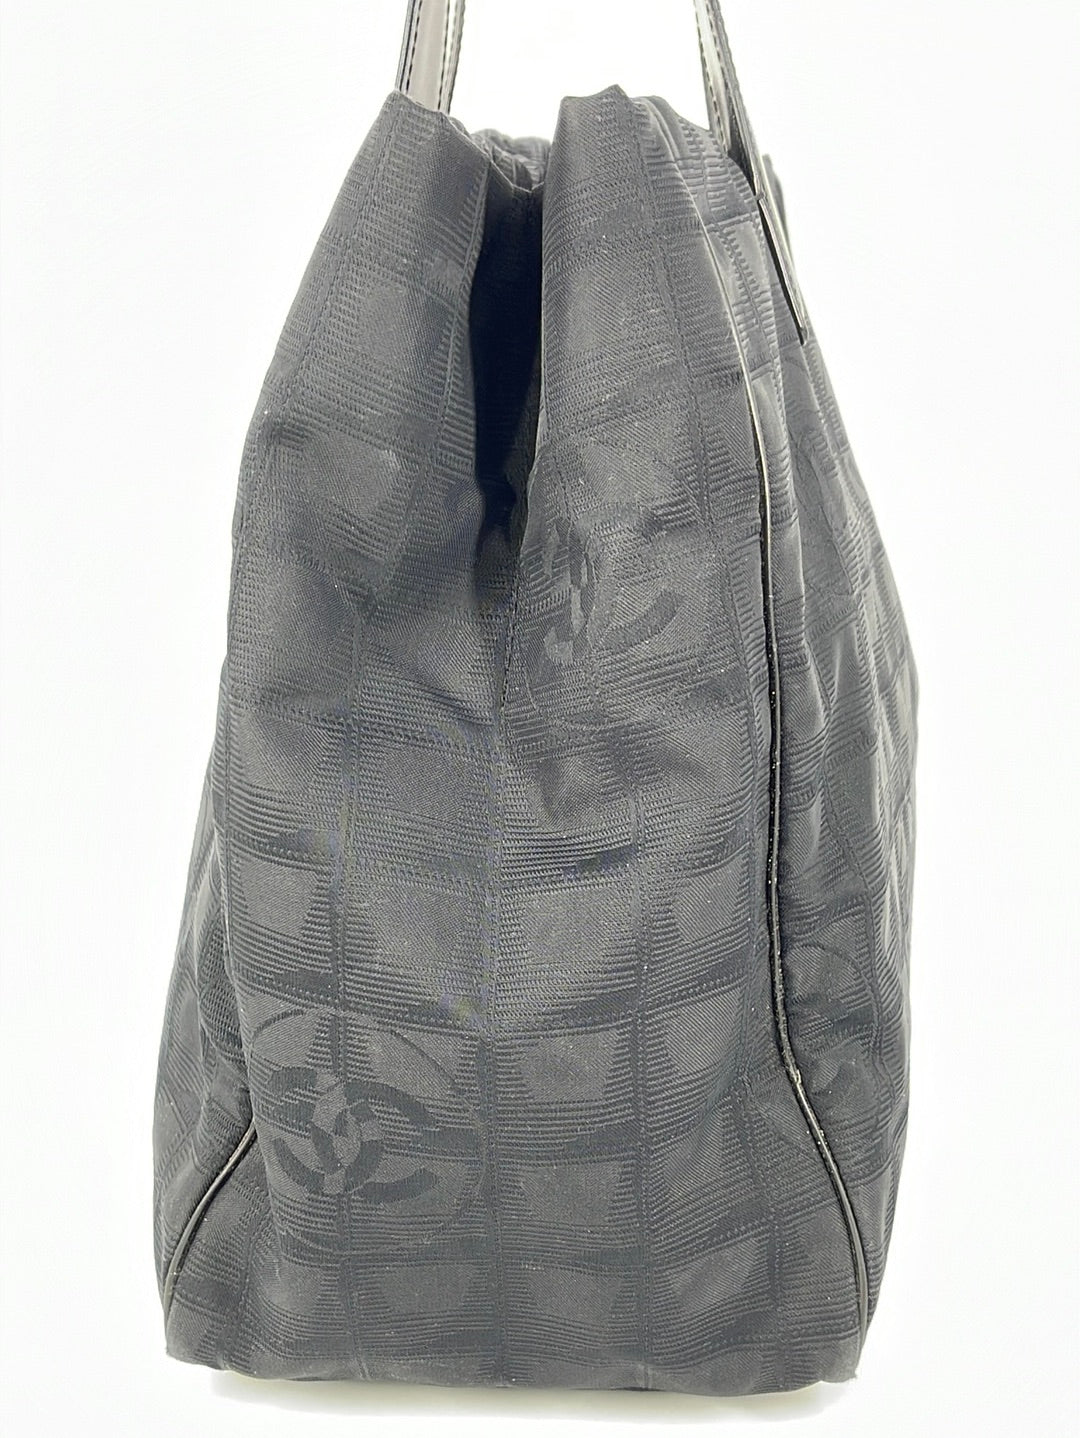 Chanel Vintage White Logo Black Canvas Tote Bag